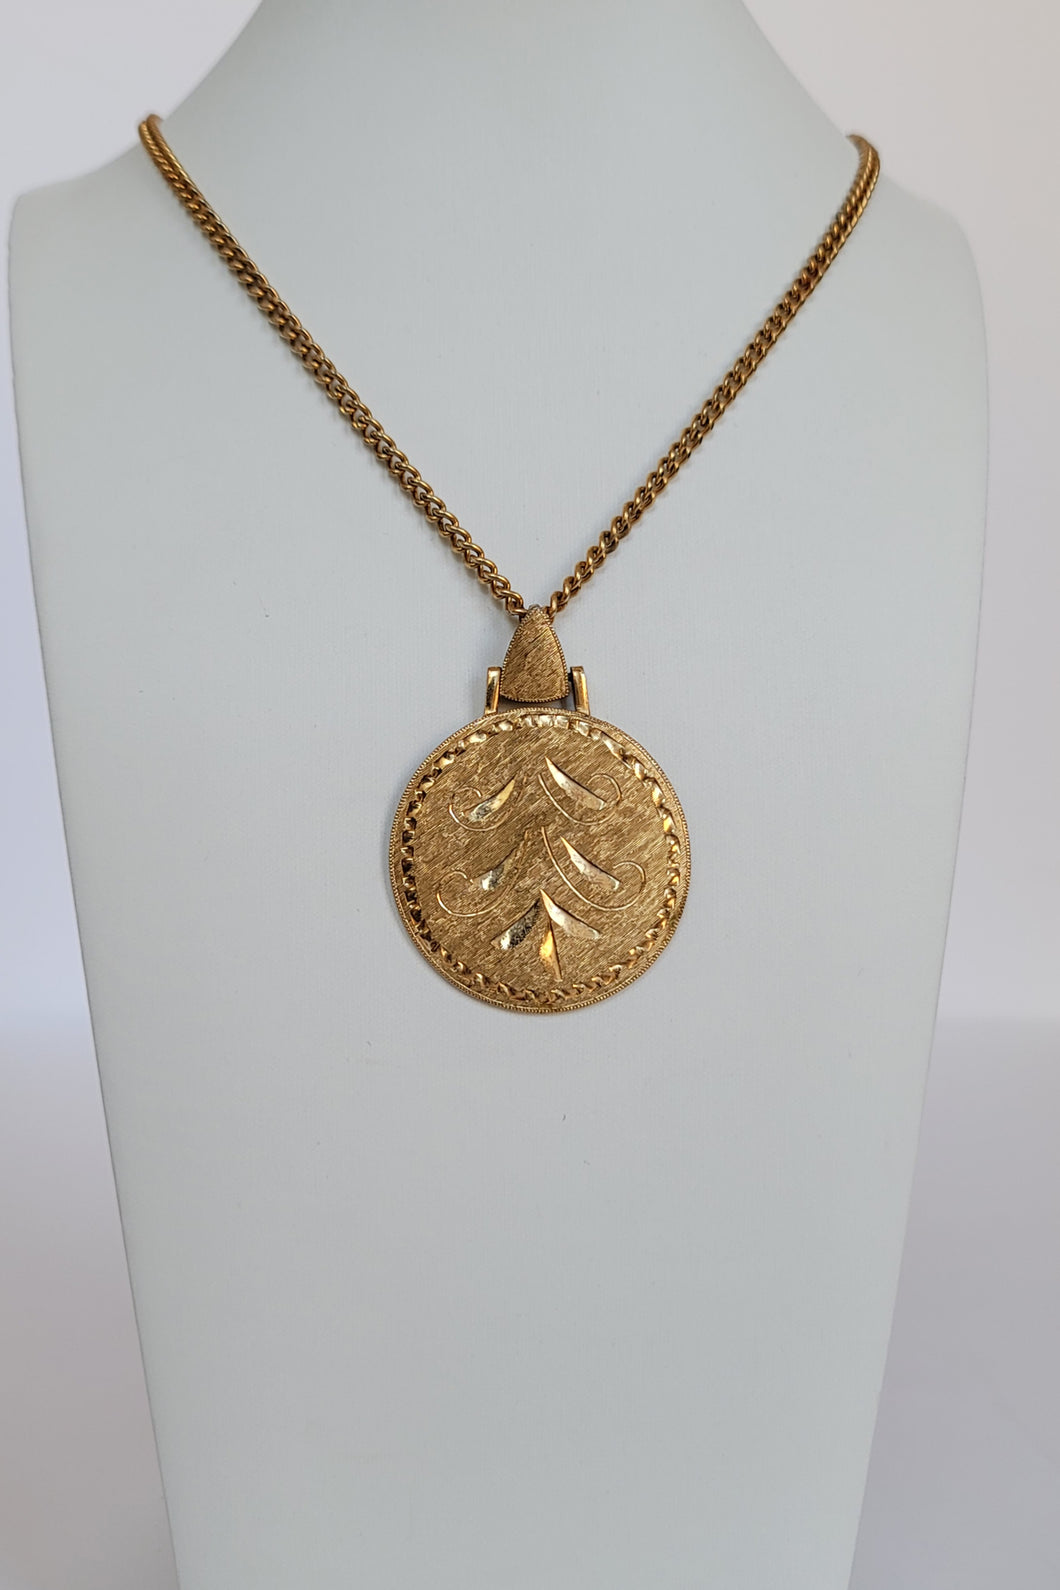 70's Brushed Gold Tone Pendant Necklace